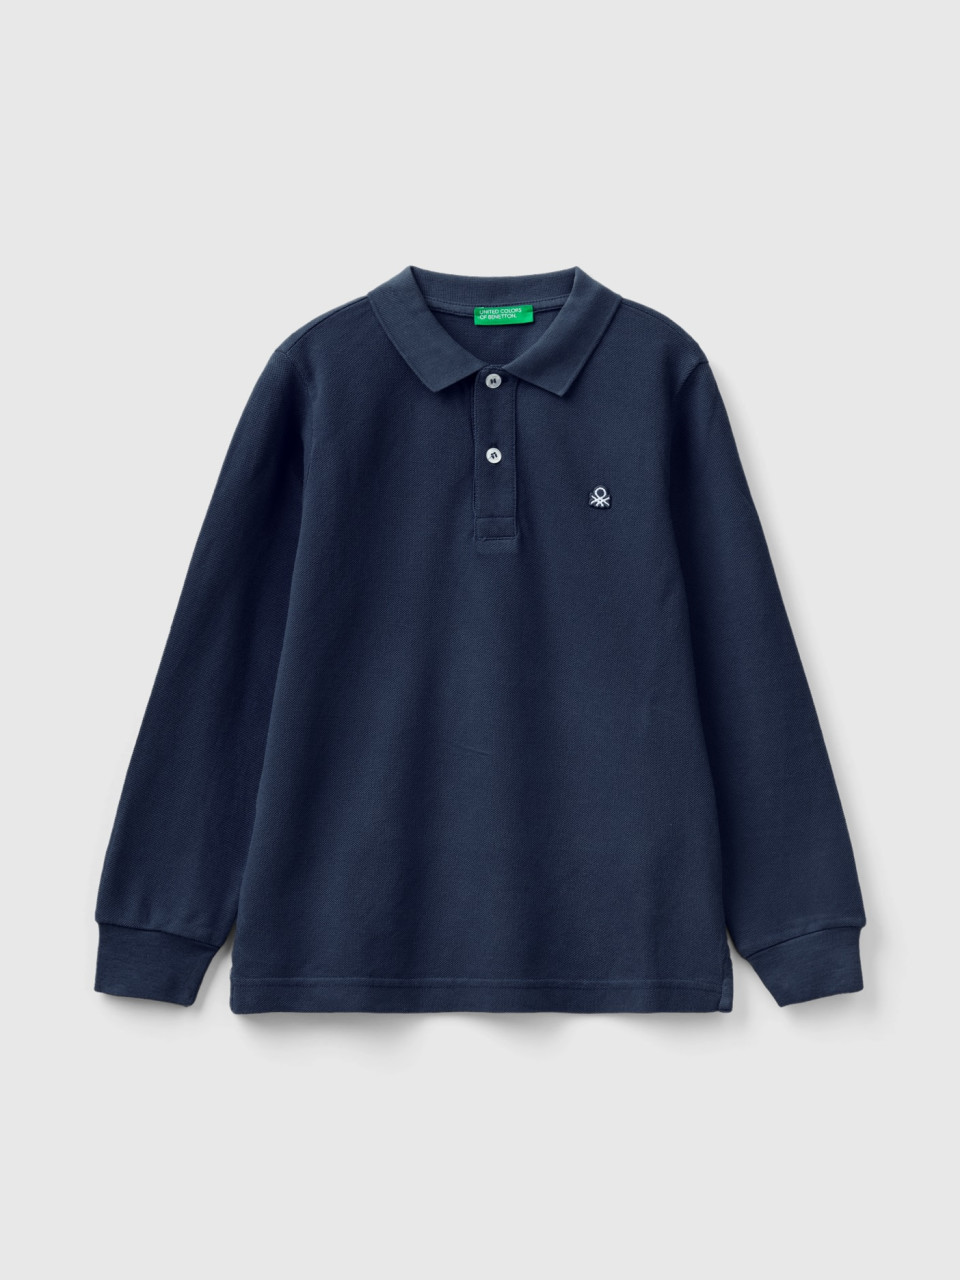 Benetton, 100% Organic Cotton Long Sleeve Polo, Dark Blue, Kids